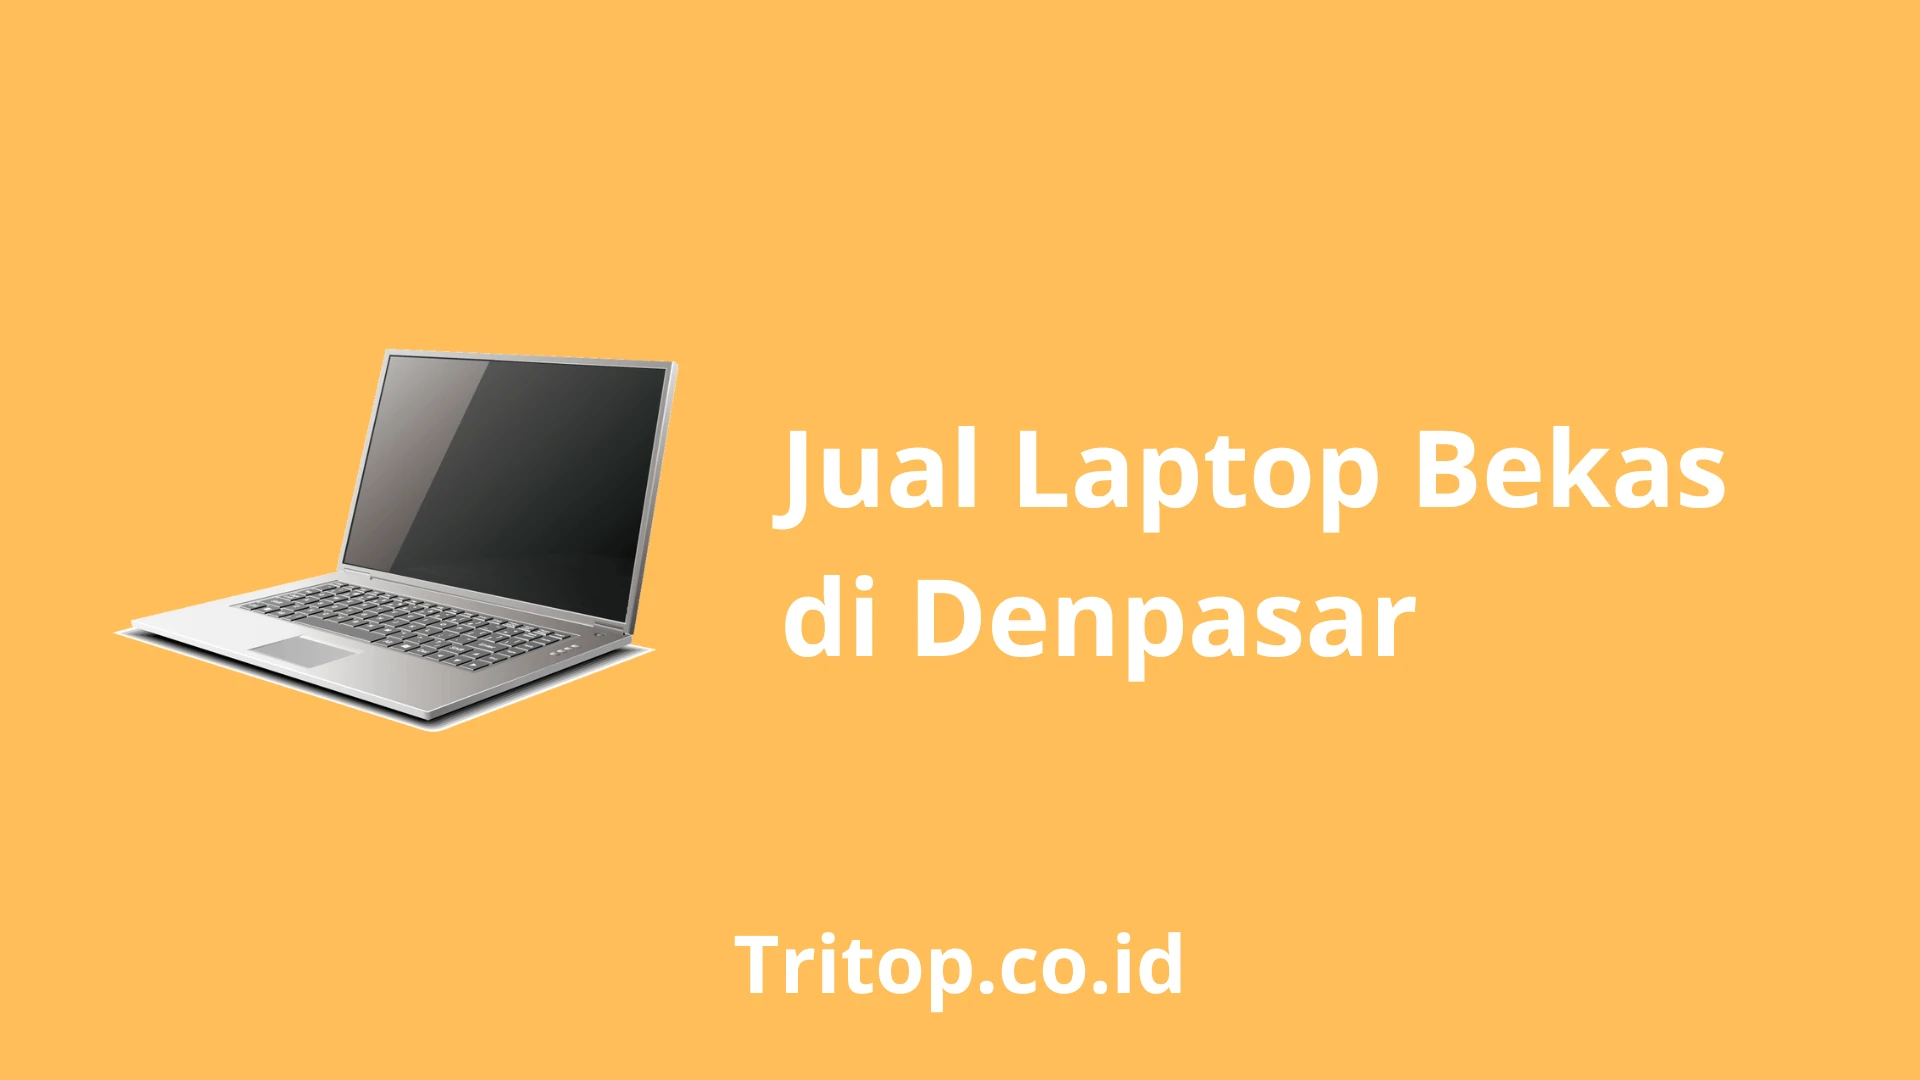 Jual Laptop Bekas Denpasar Tritop.co.id